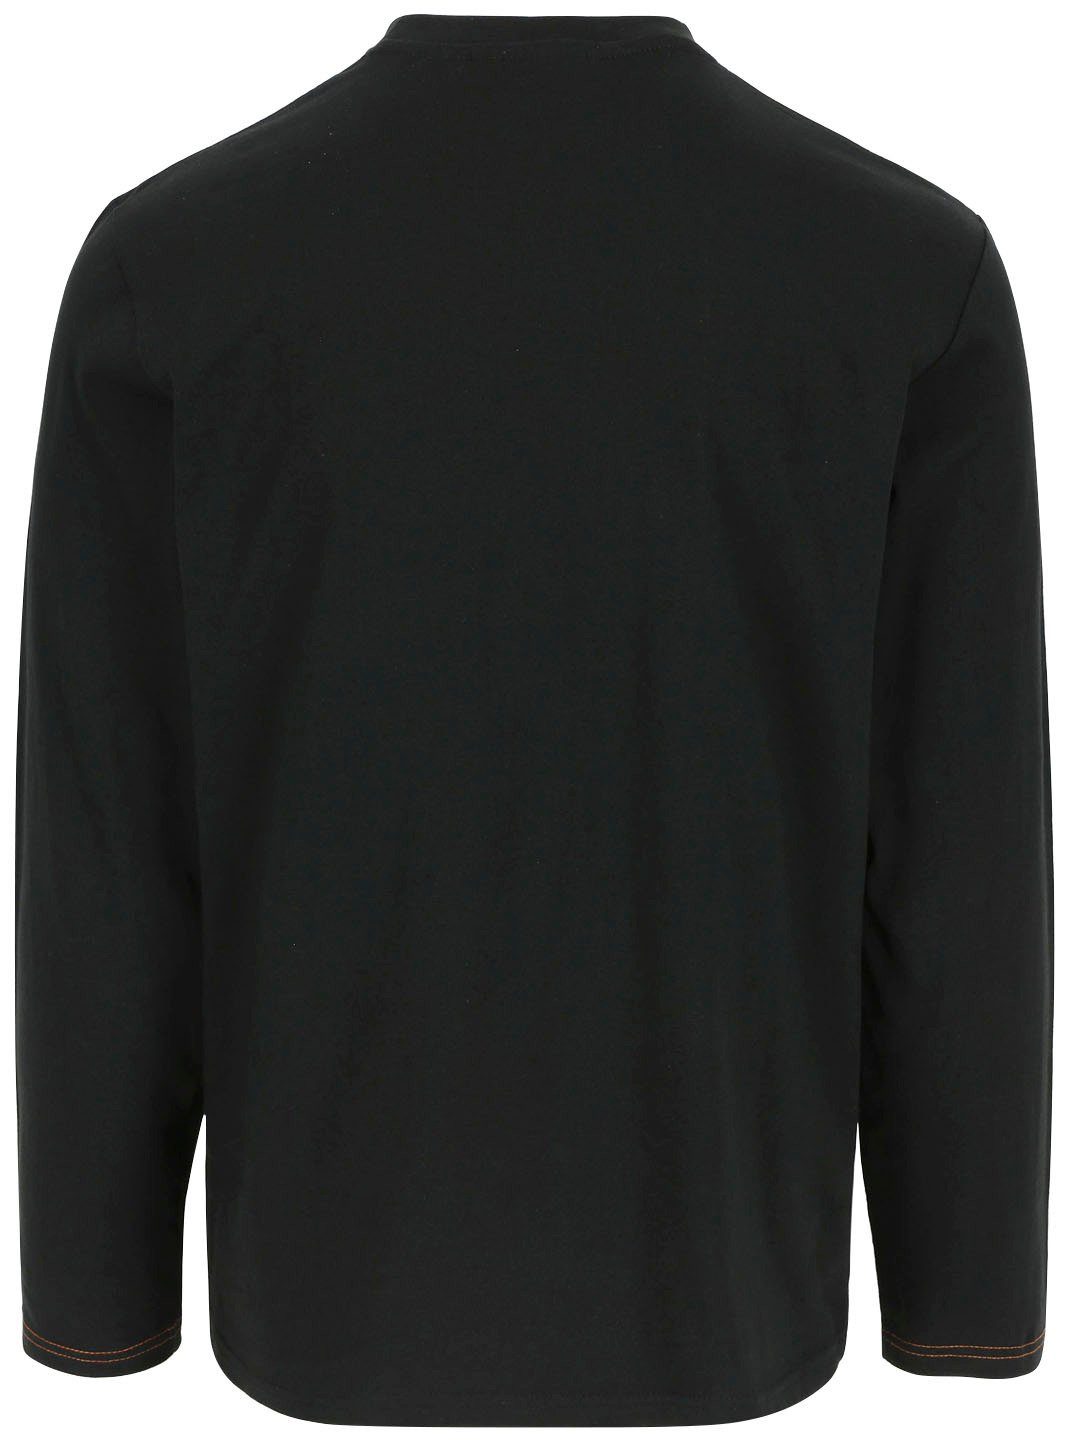 Basic Herock Baumwolle, vorgeschrumpfte t-shirt Langarmshirt langärmlig schwarz Noet % 100 angenehmes Tragegefühl,